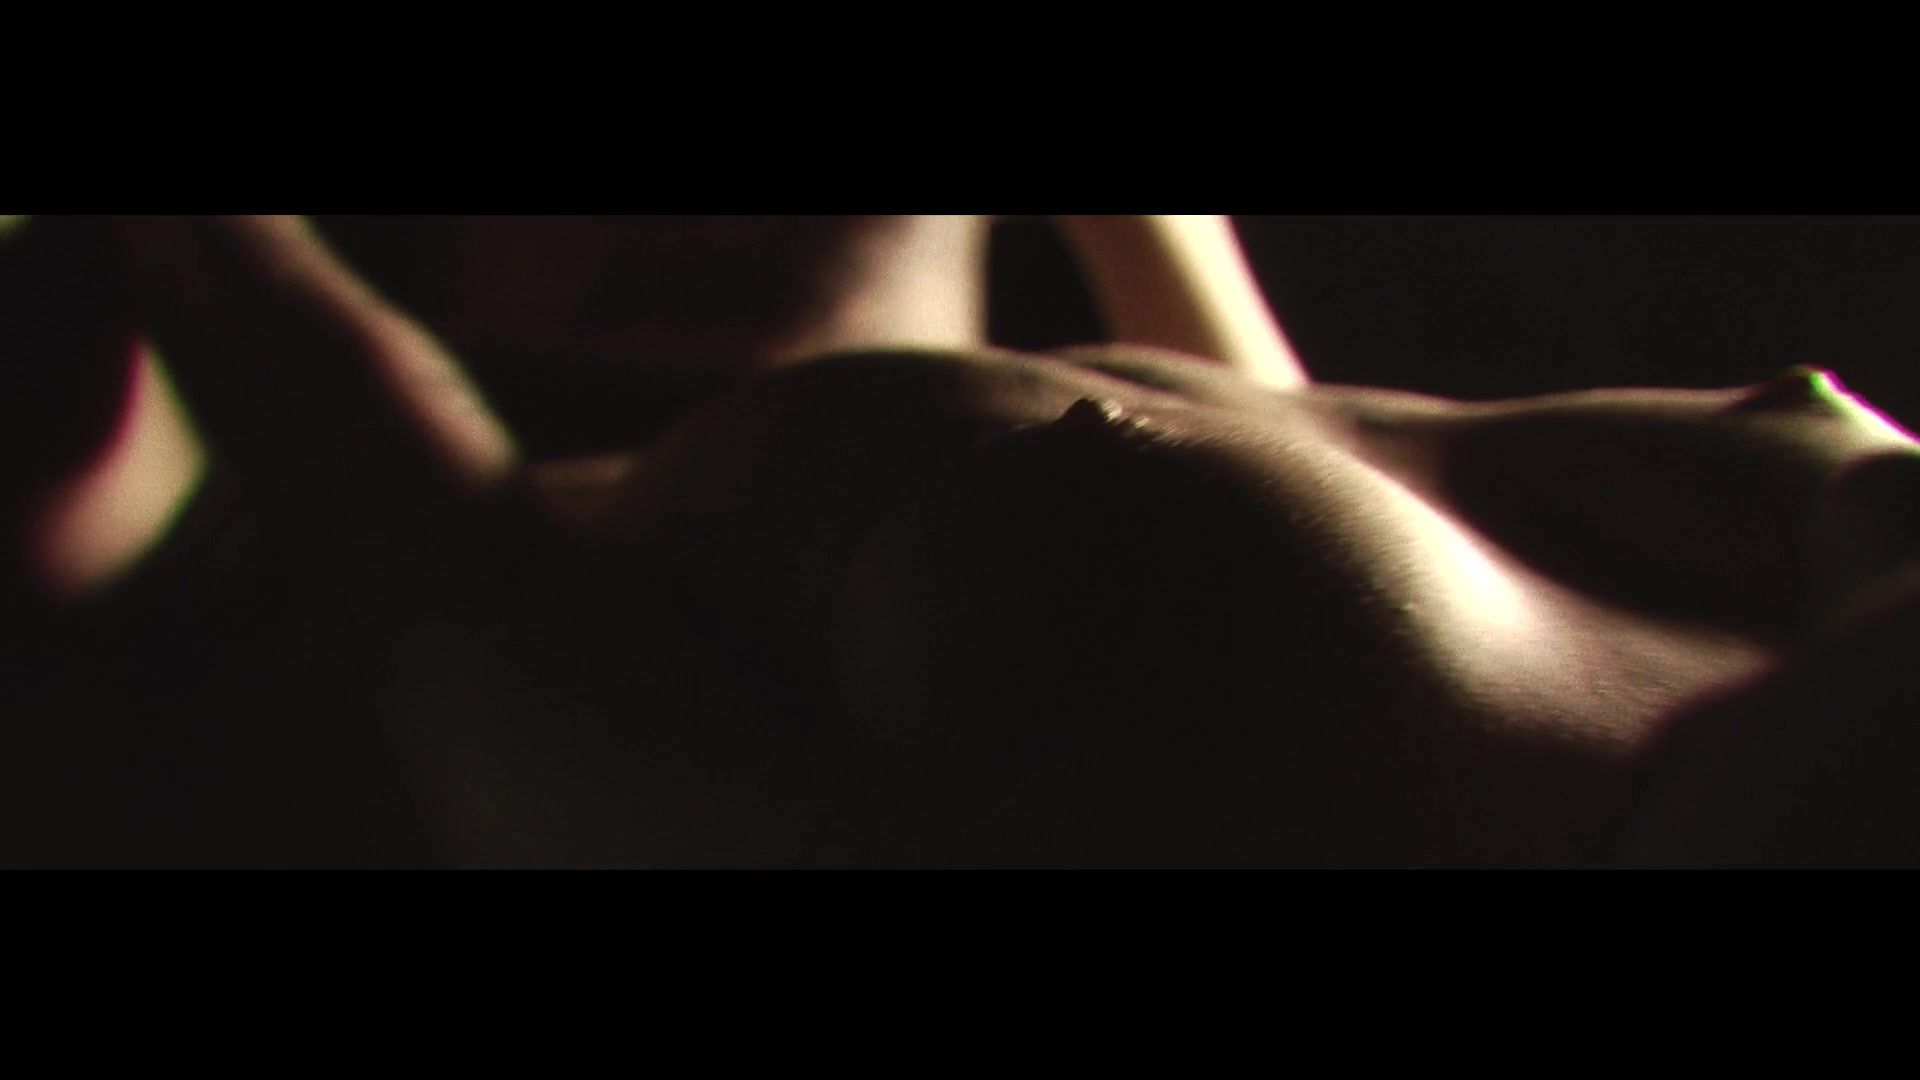 Harcore Nude Art Video - 2 Sexual CloseUp Teenager